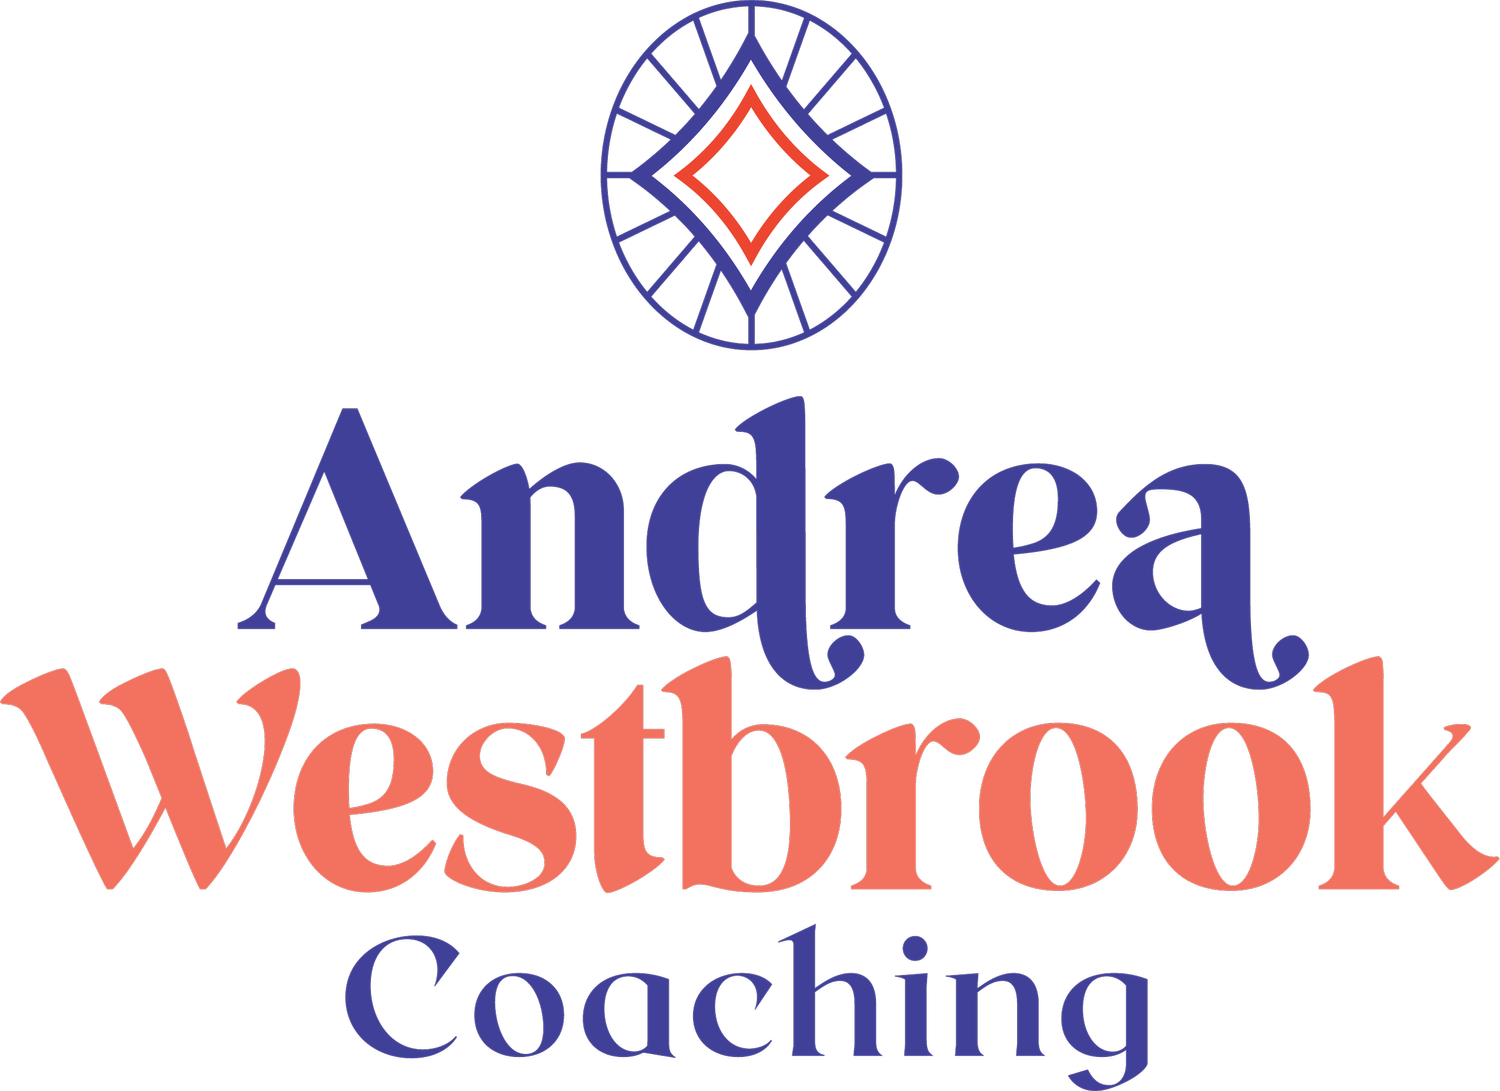 Andrea Westbrook Coaching